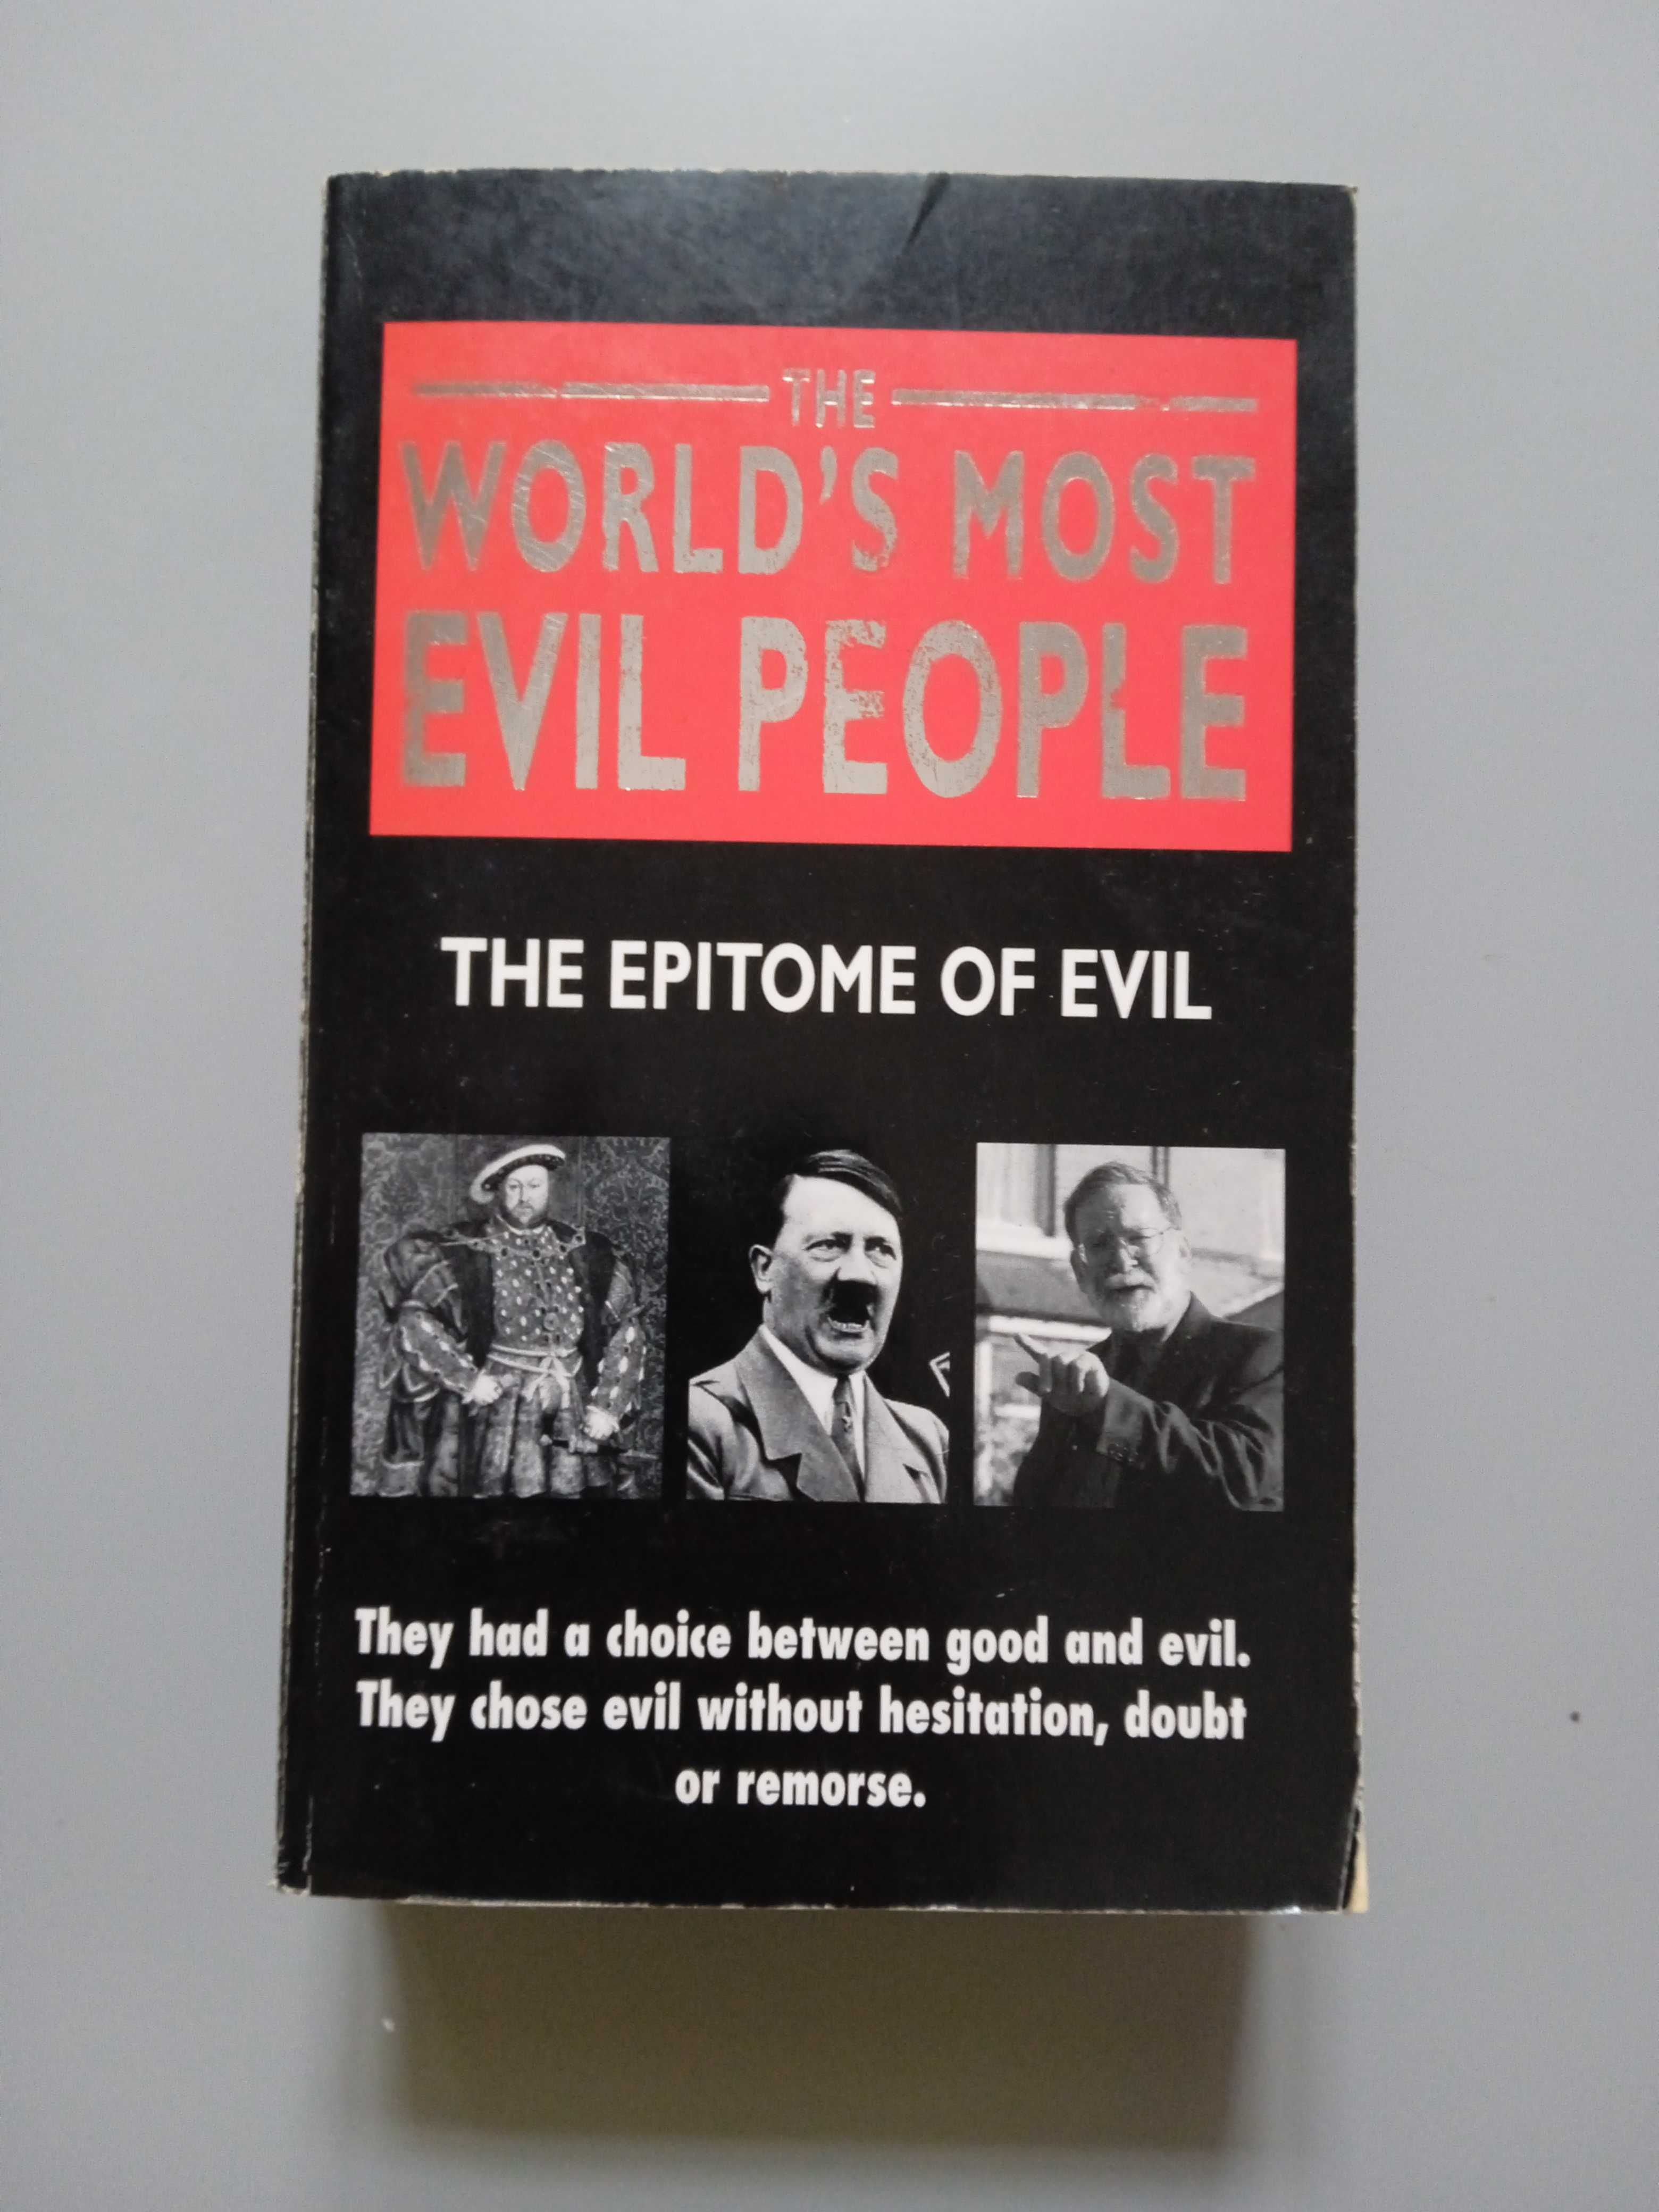 Livro "World's Most Evil People"